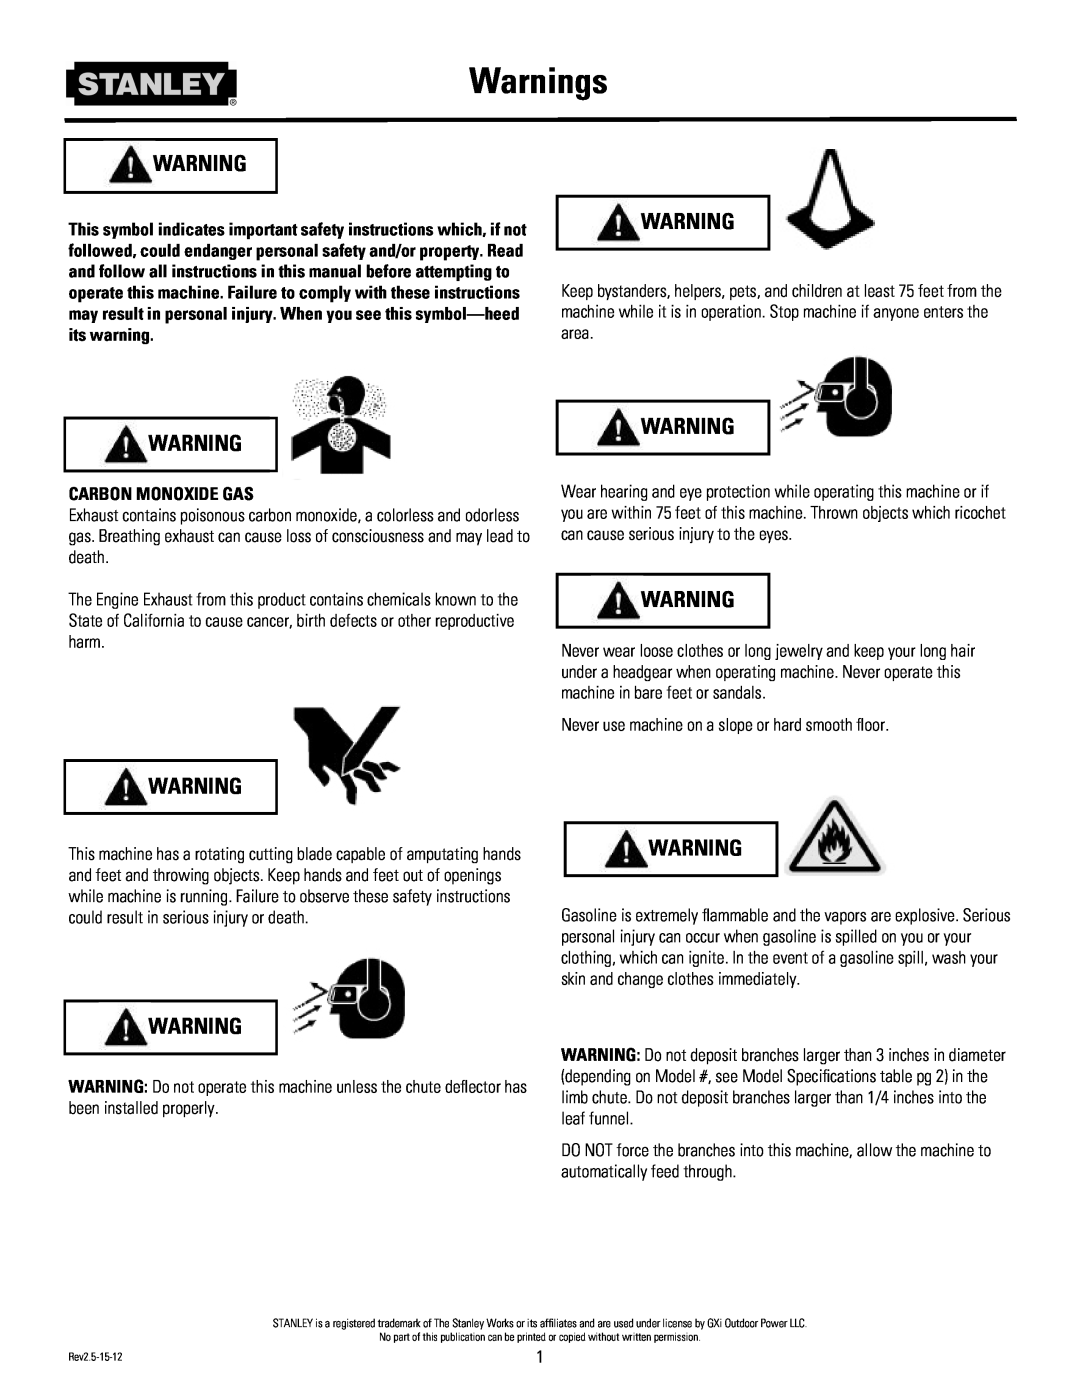 Stanley Black & Decker CH2 owner manual Warnings, Carbon Monoxide Gas 